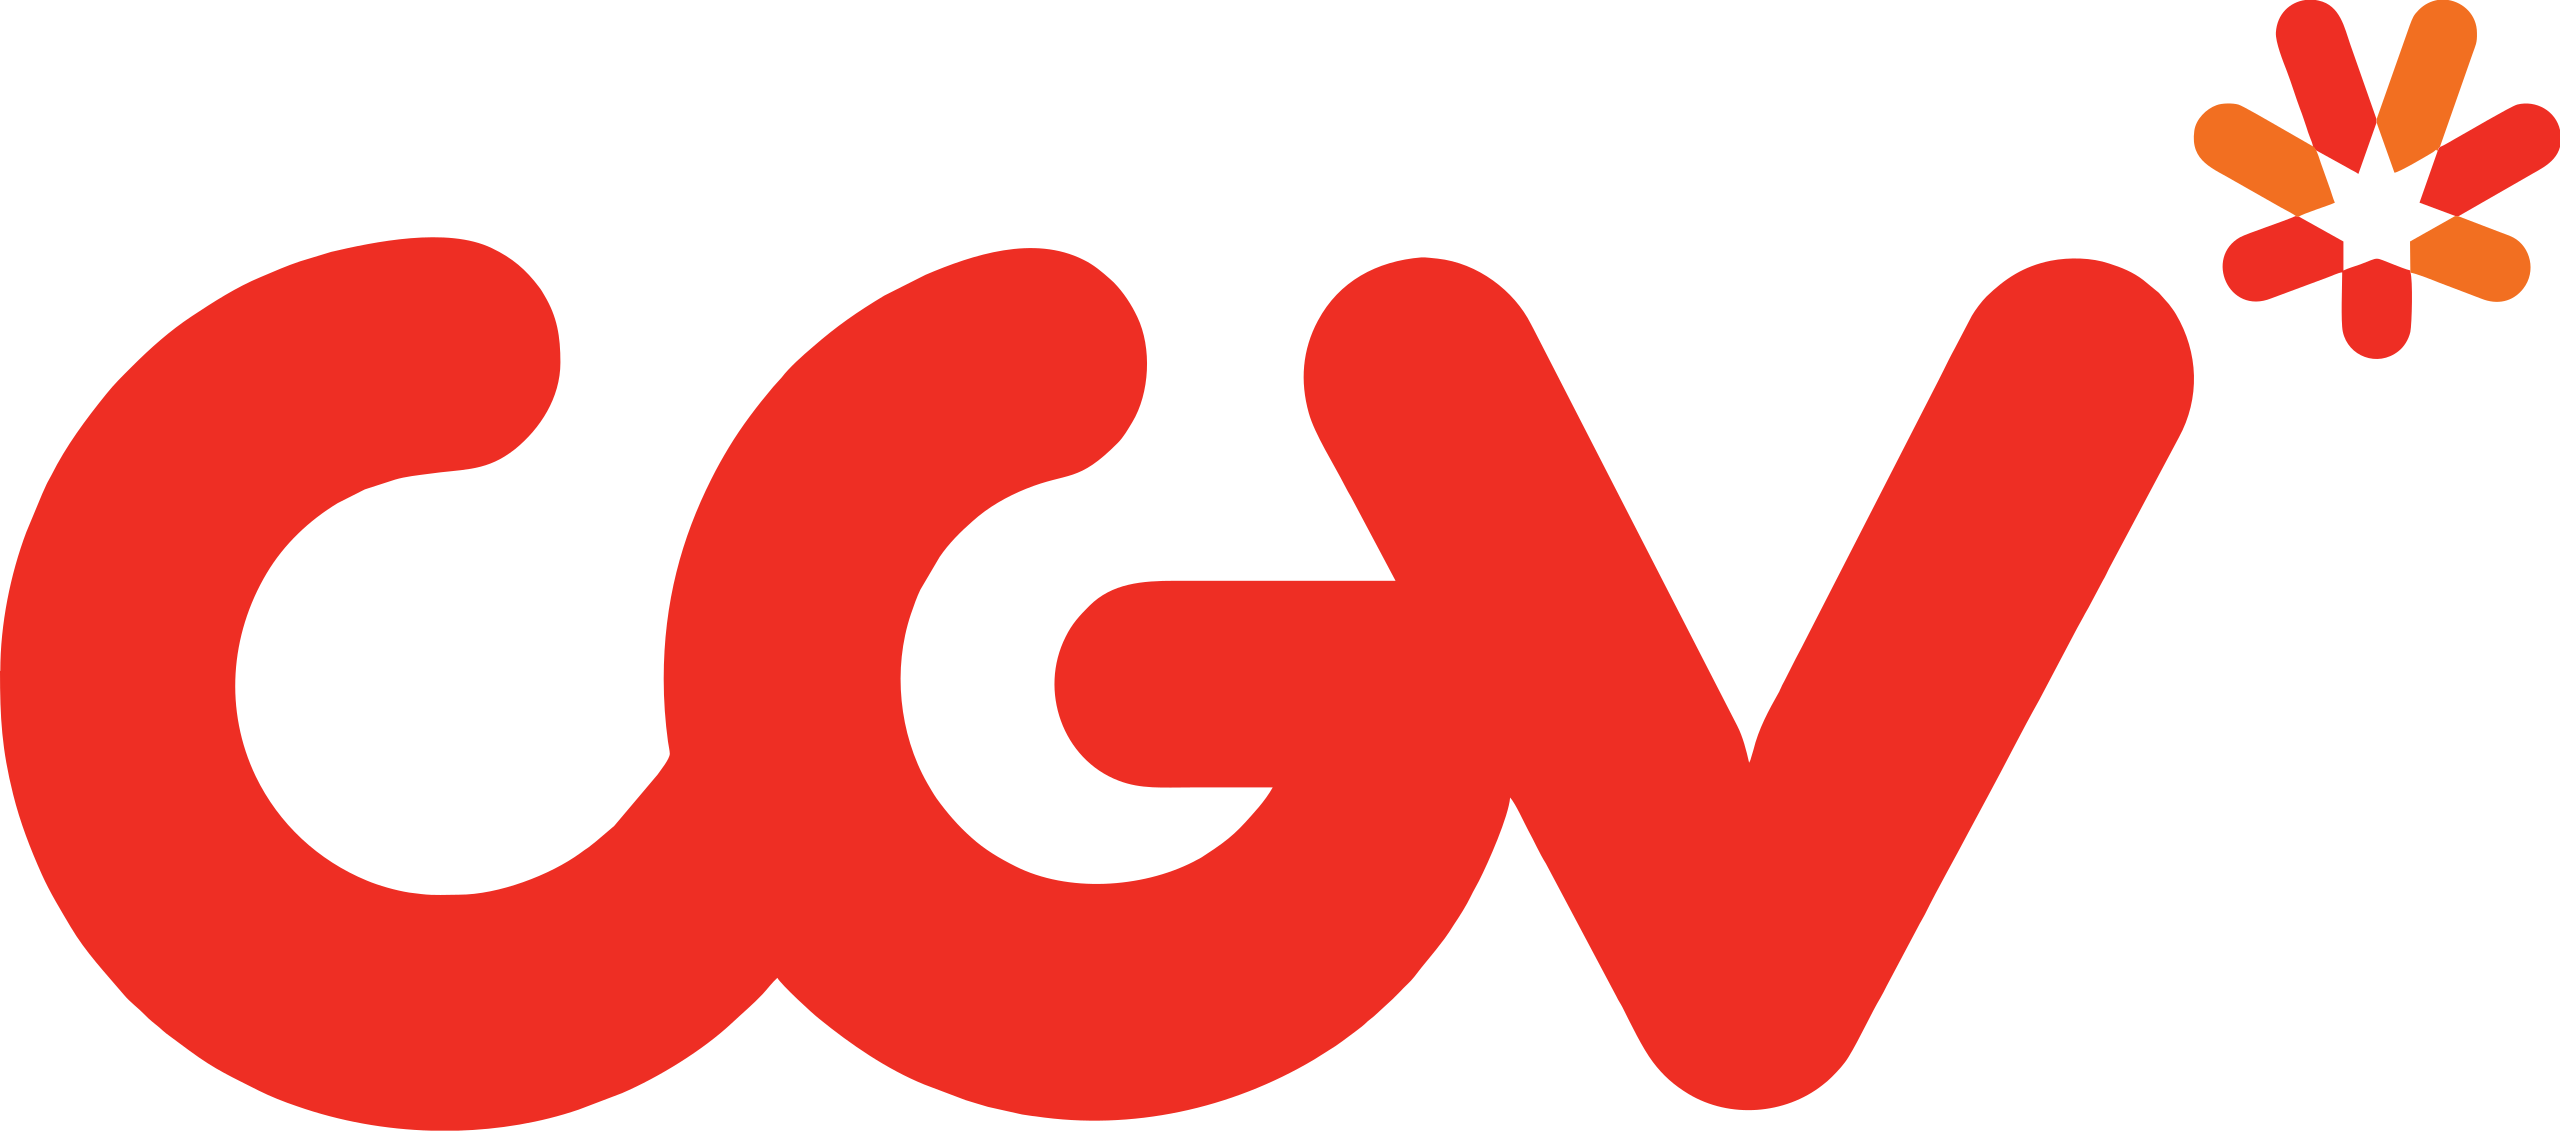 File:CGV logo.svg - Wikimedia Commons